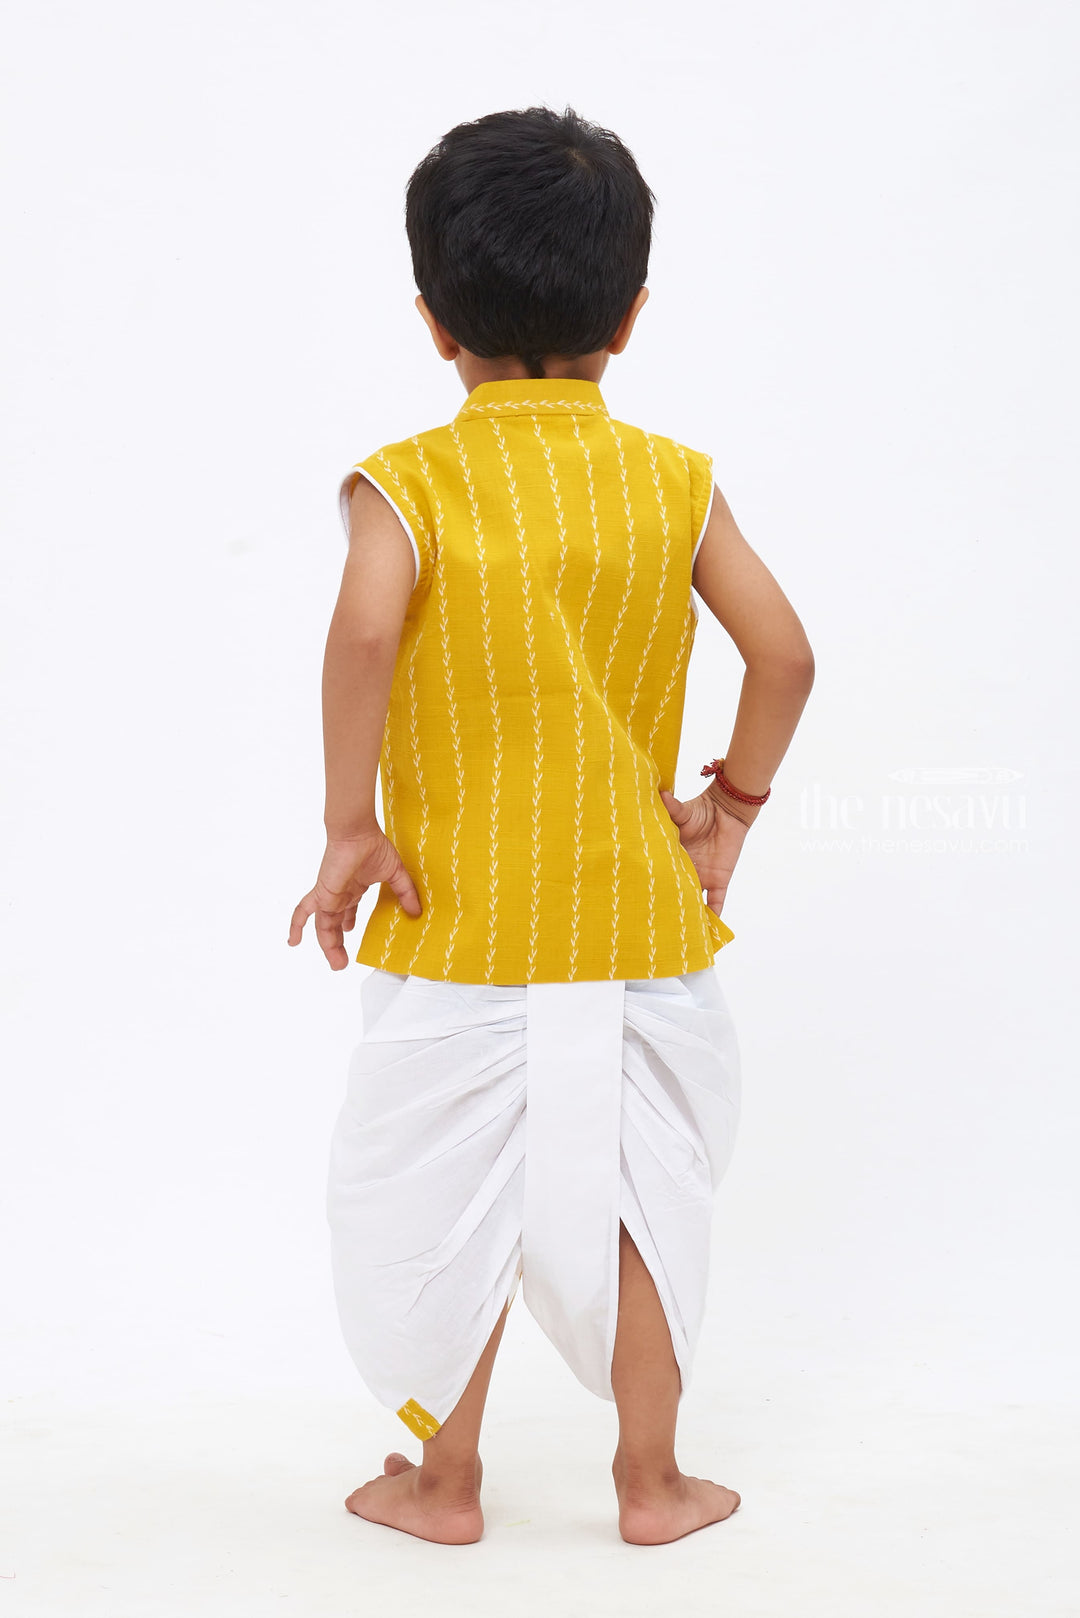 The Nesavu Boys Dothi Set Boys Radiant Yellow Kurta with Elegant Patterns & White Panchagajam Nesavu Boys Yellow Ensemble | Patterned Kurta with White Panchagajam | The Nesavu